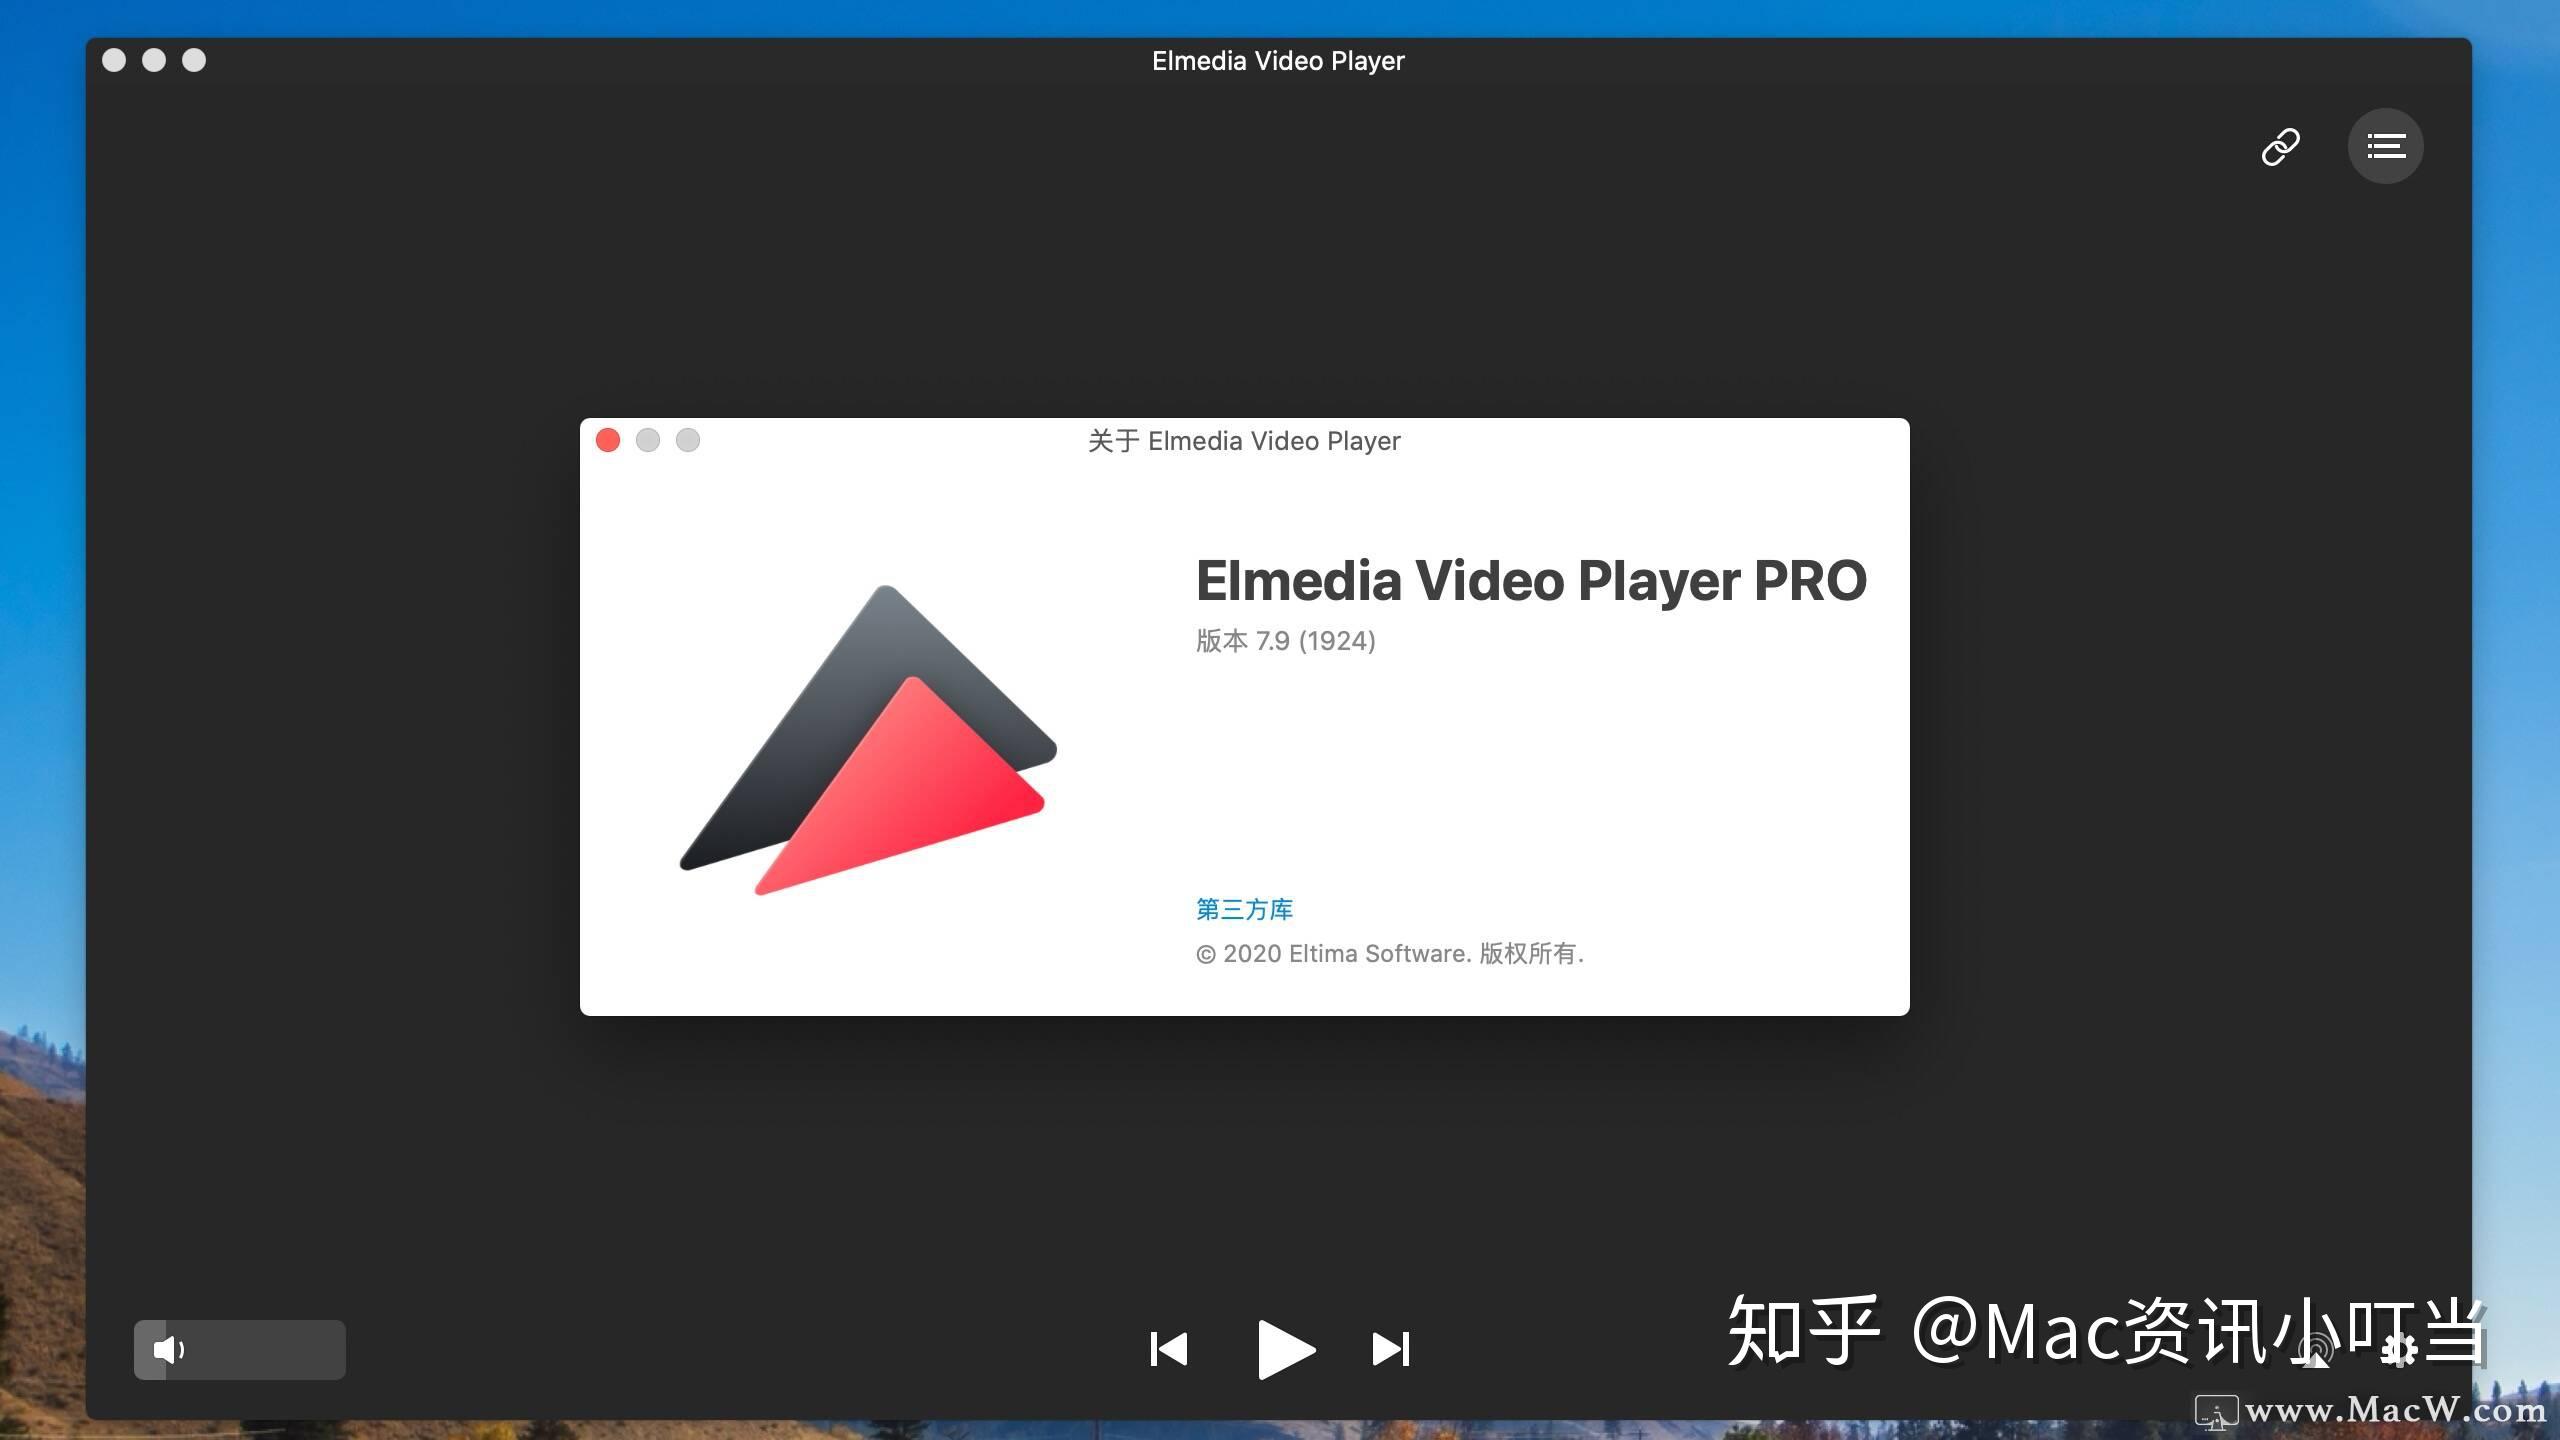 instal the new for windows Elmedia Player Pro